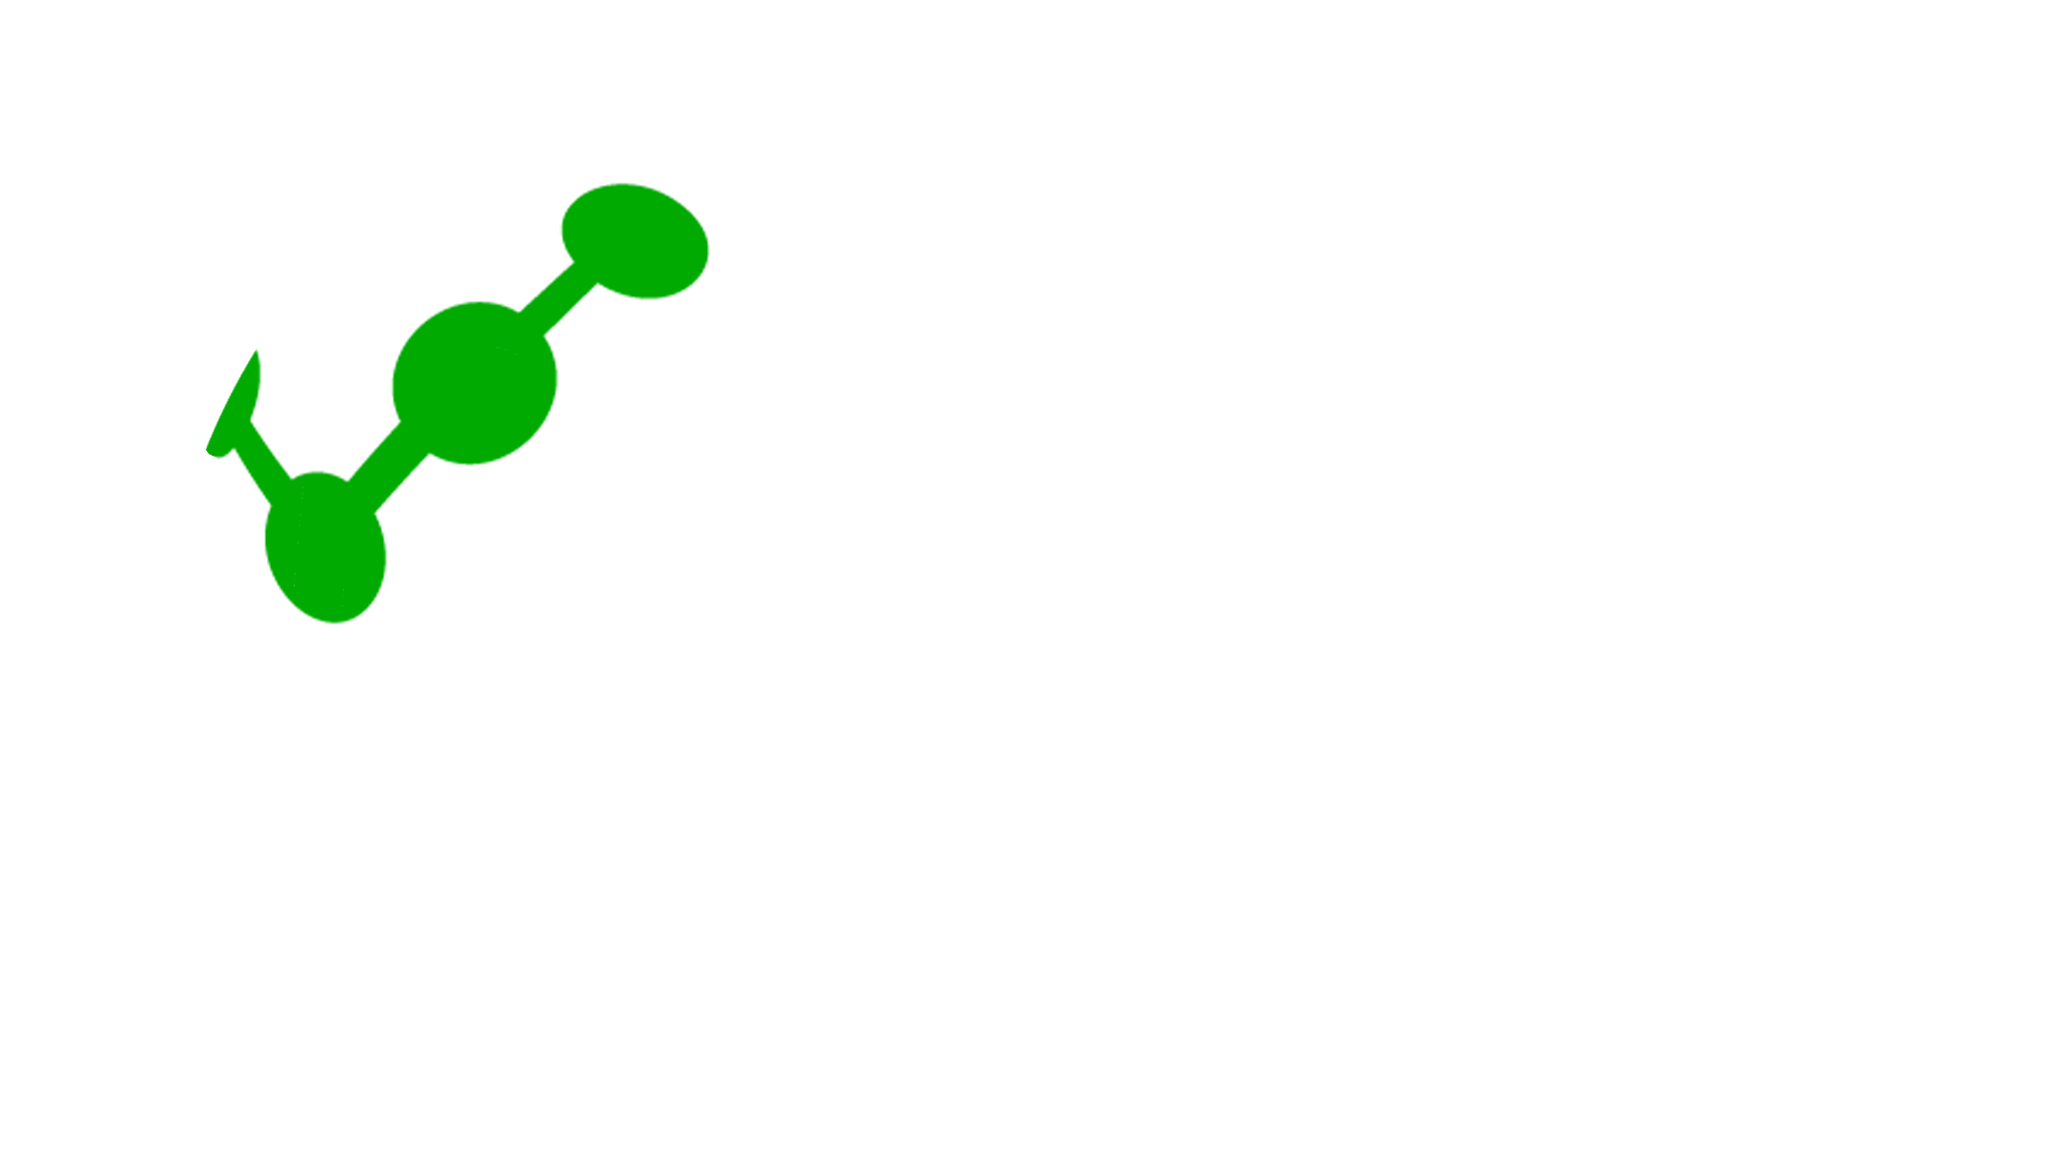 Cabinet Impact Service Plus